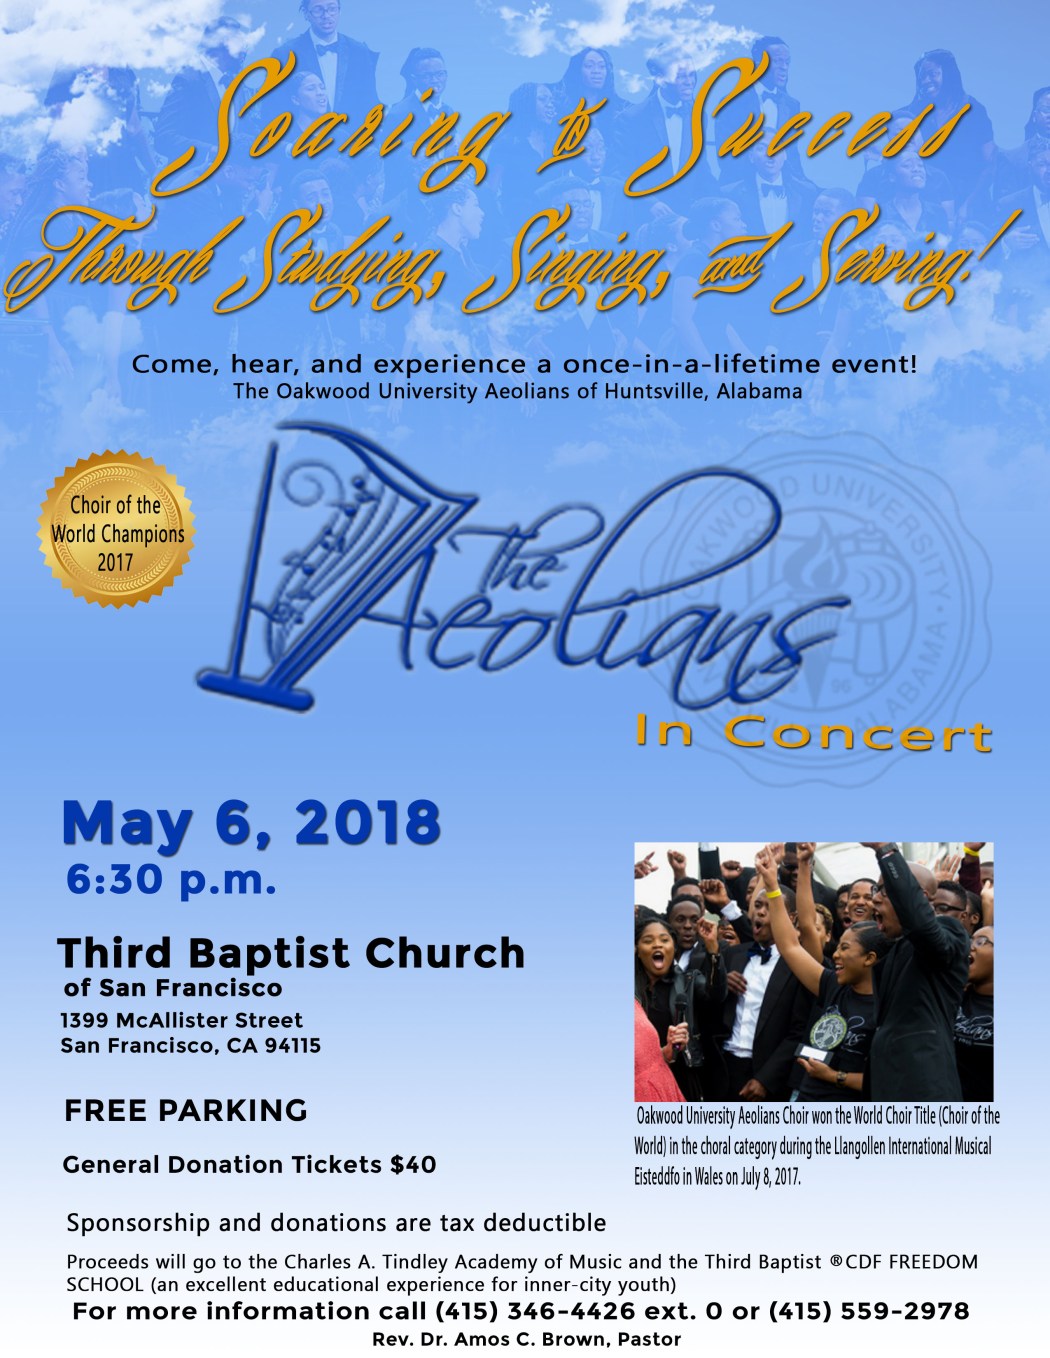 Third Baptist Church - The Aeolians in Concert SF